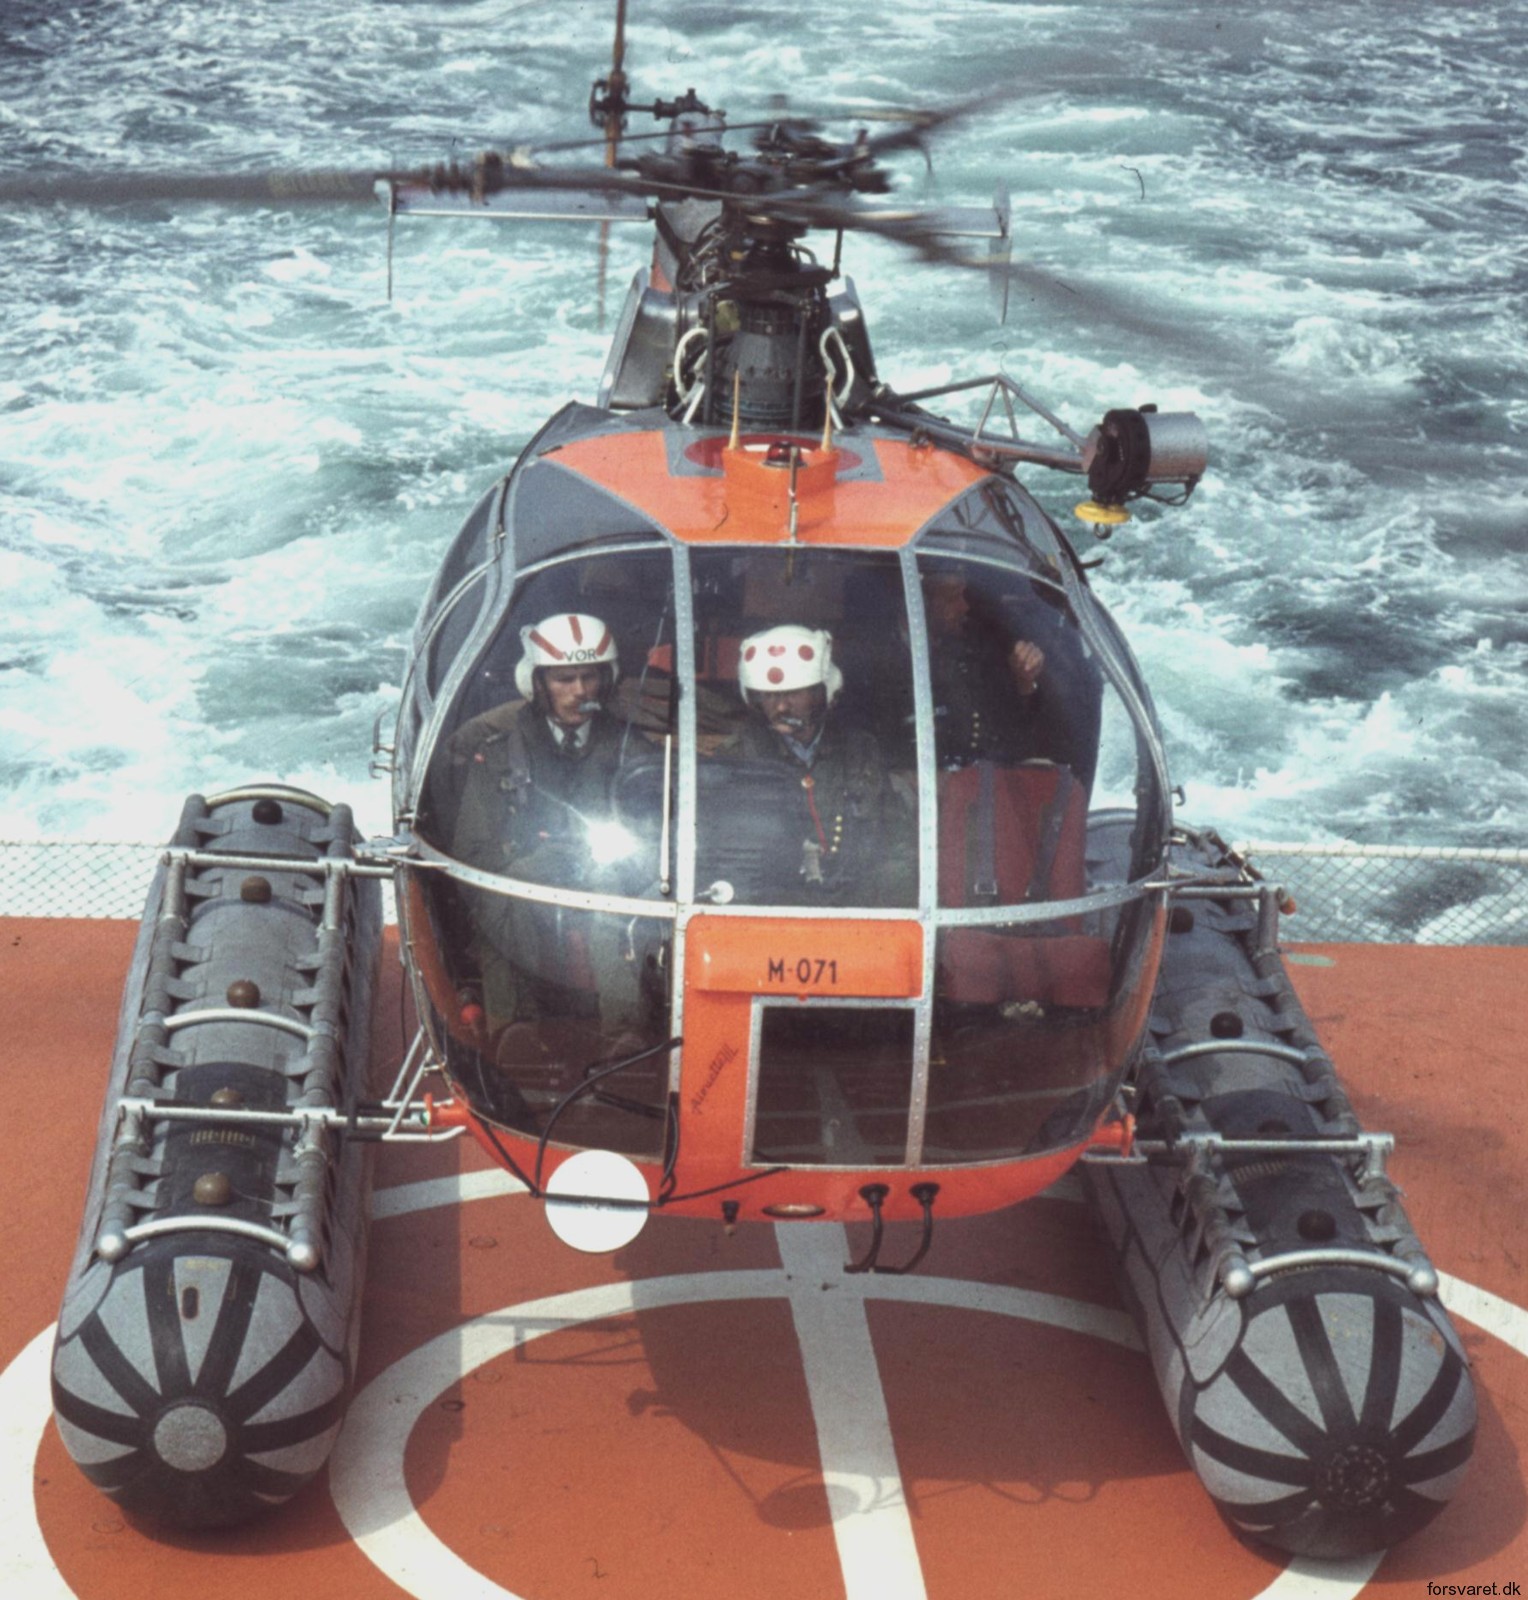 sa 316b alouette iii helicopter royal danish navy søværnet kongelige danske marine sud aviation m-071 05